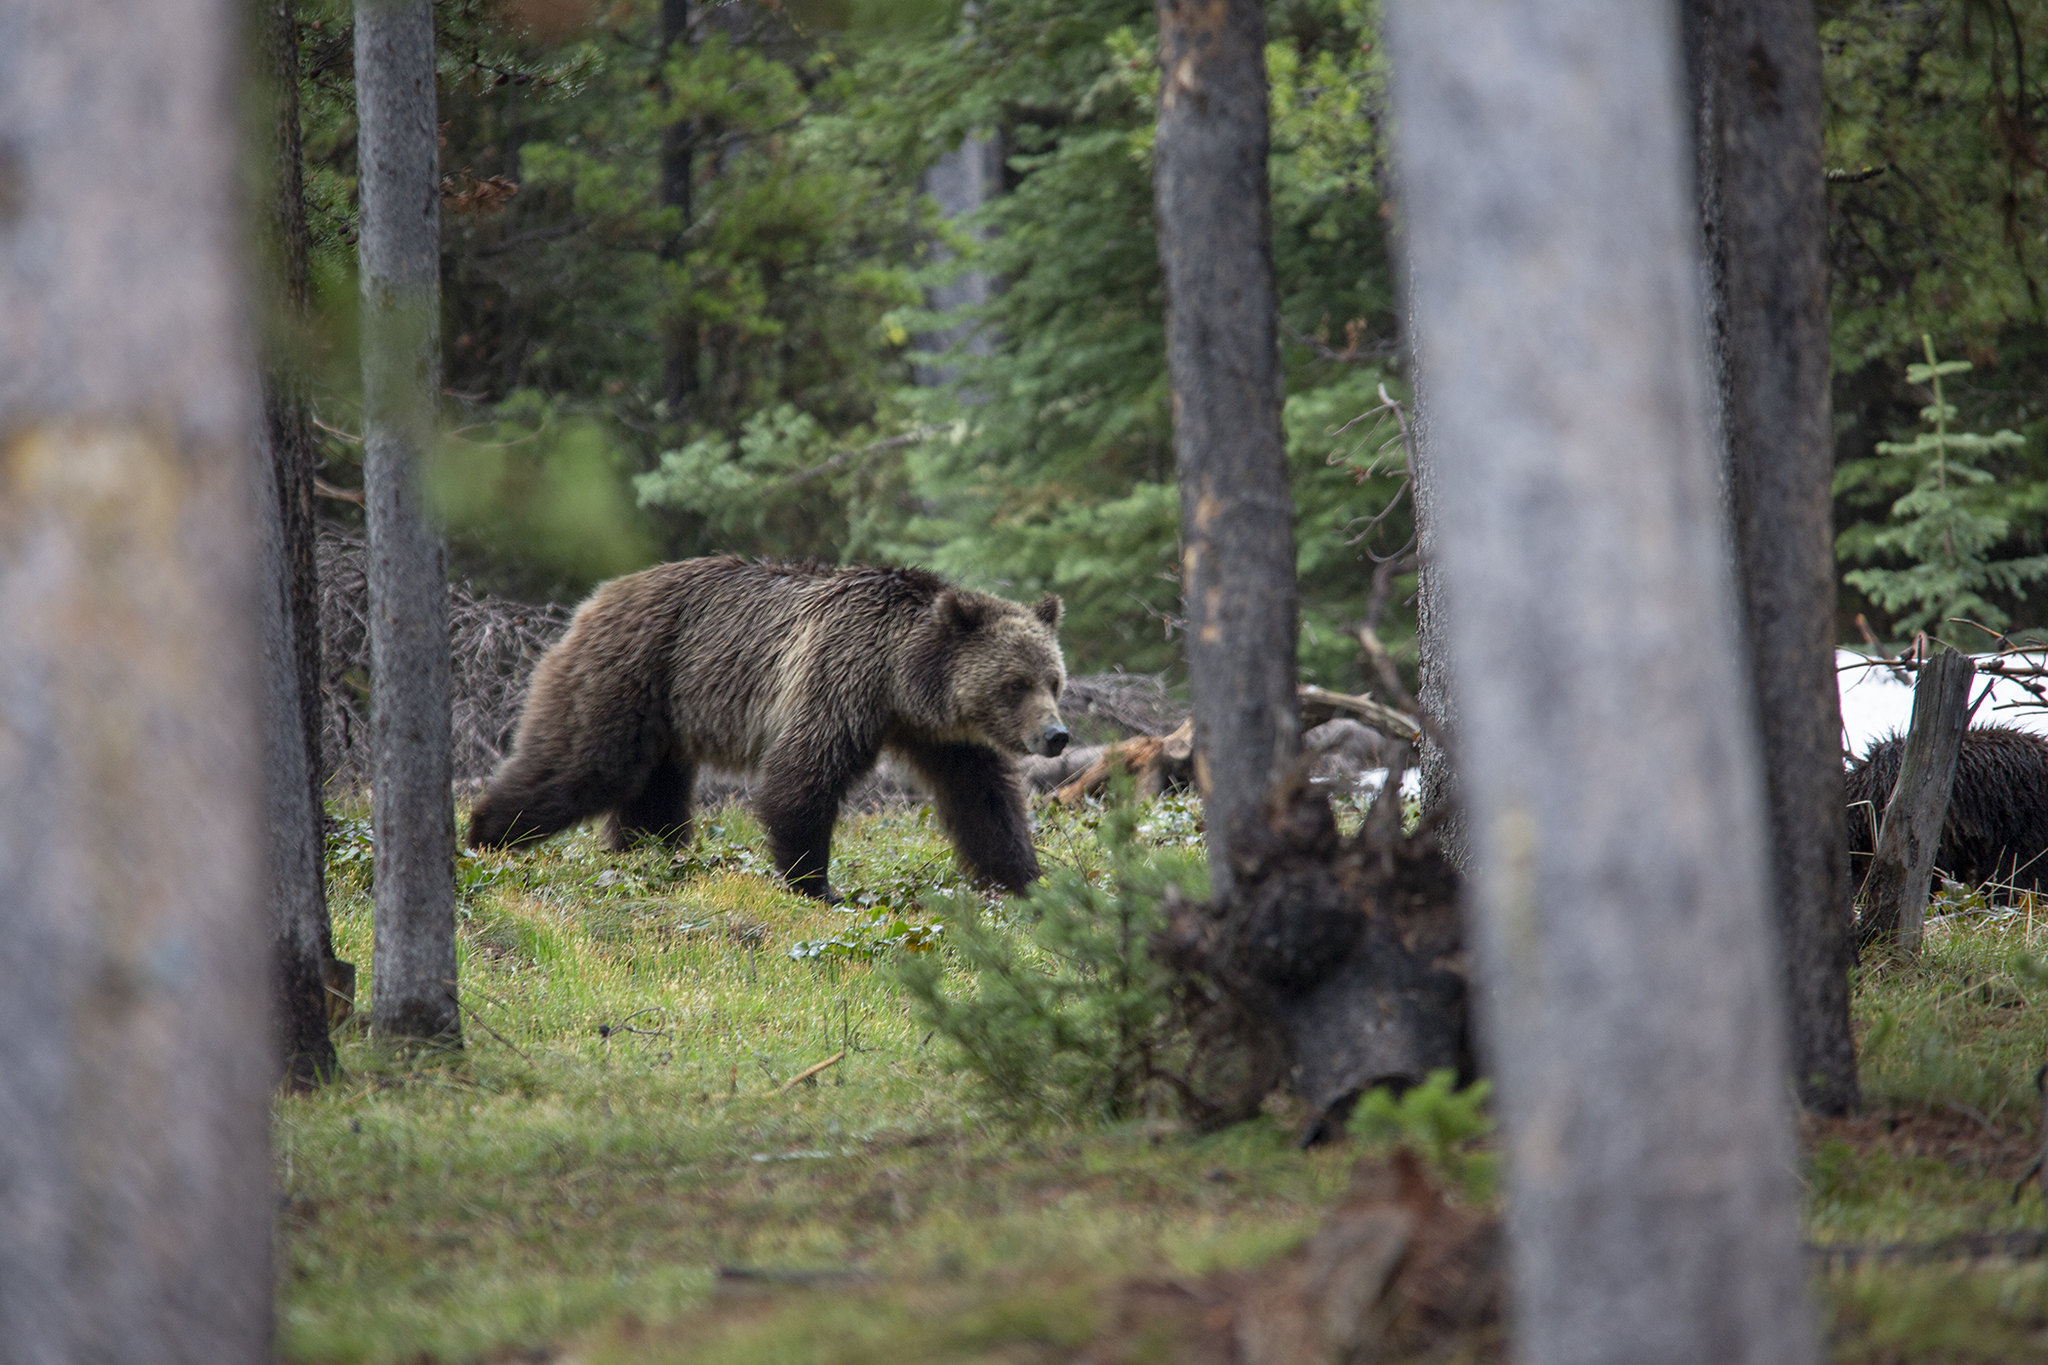 Montana hunter kills grizz in self-defense encounter